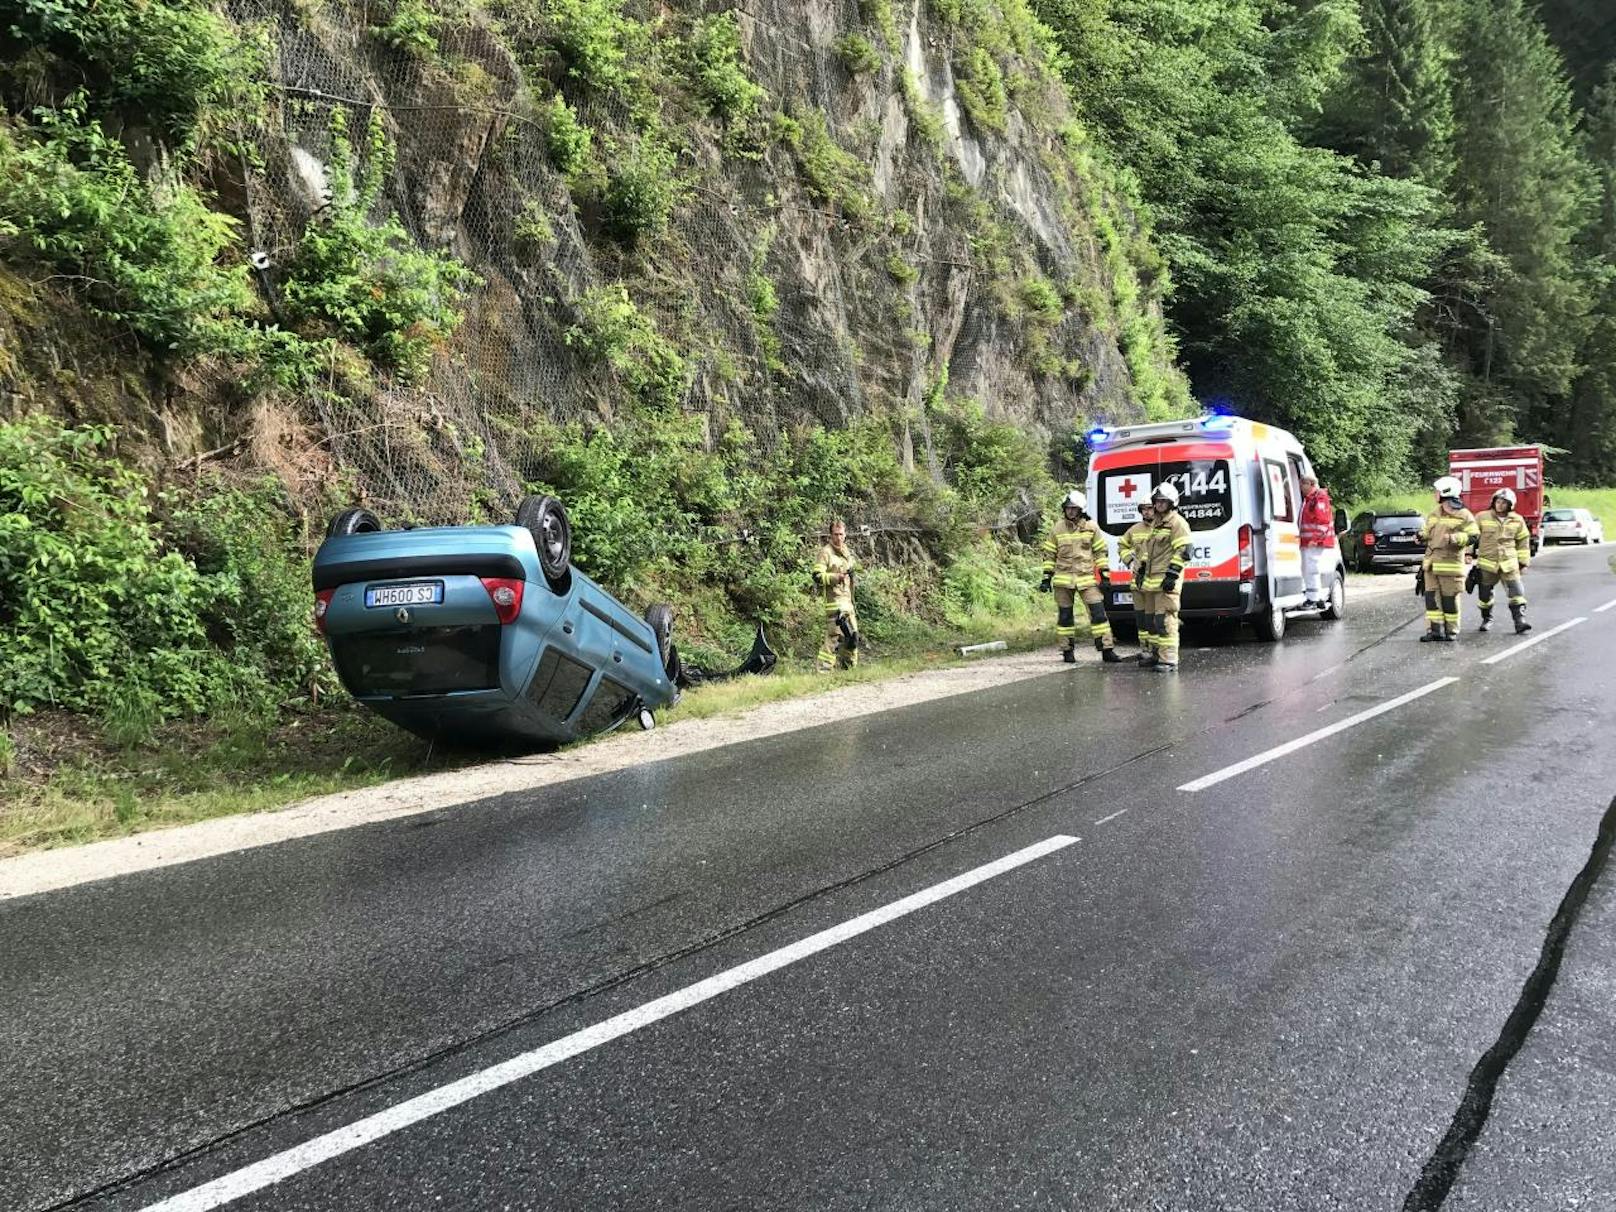 Autounfall in Tirol